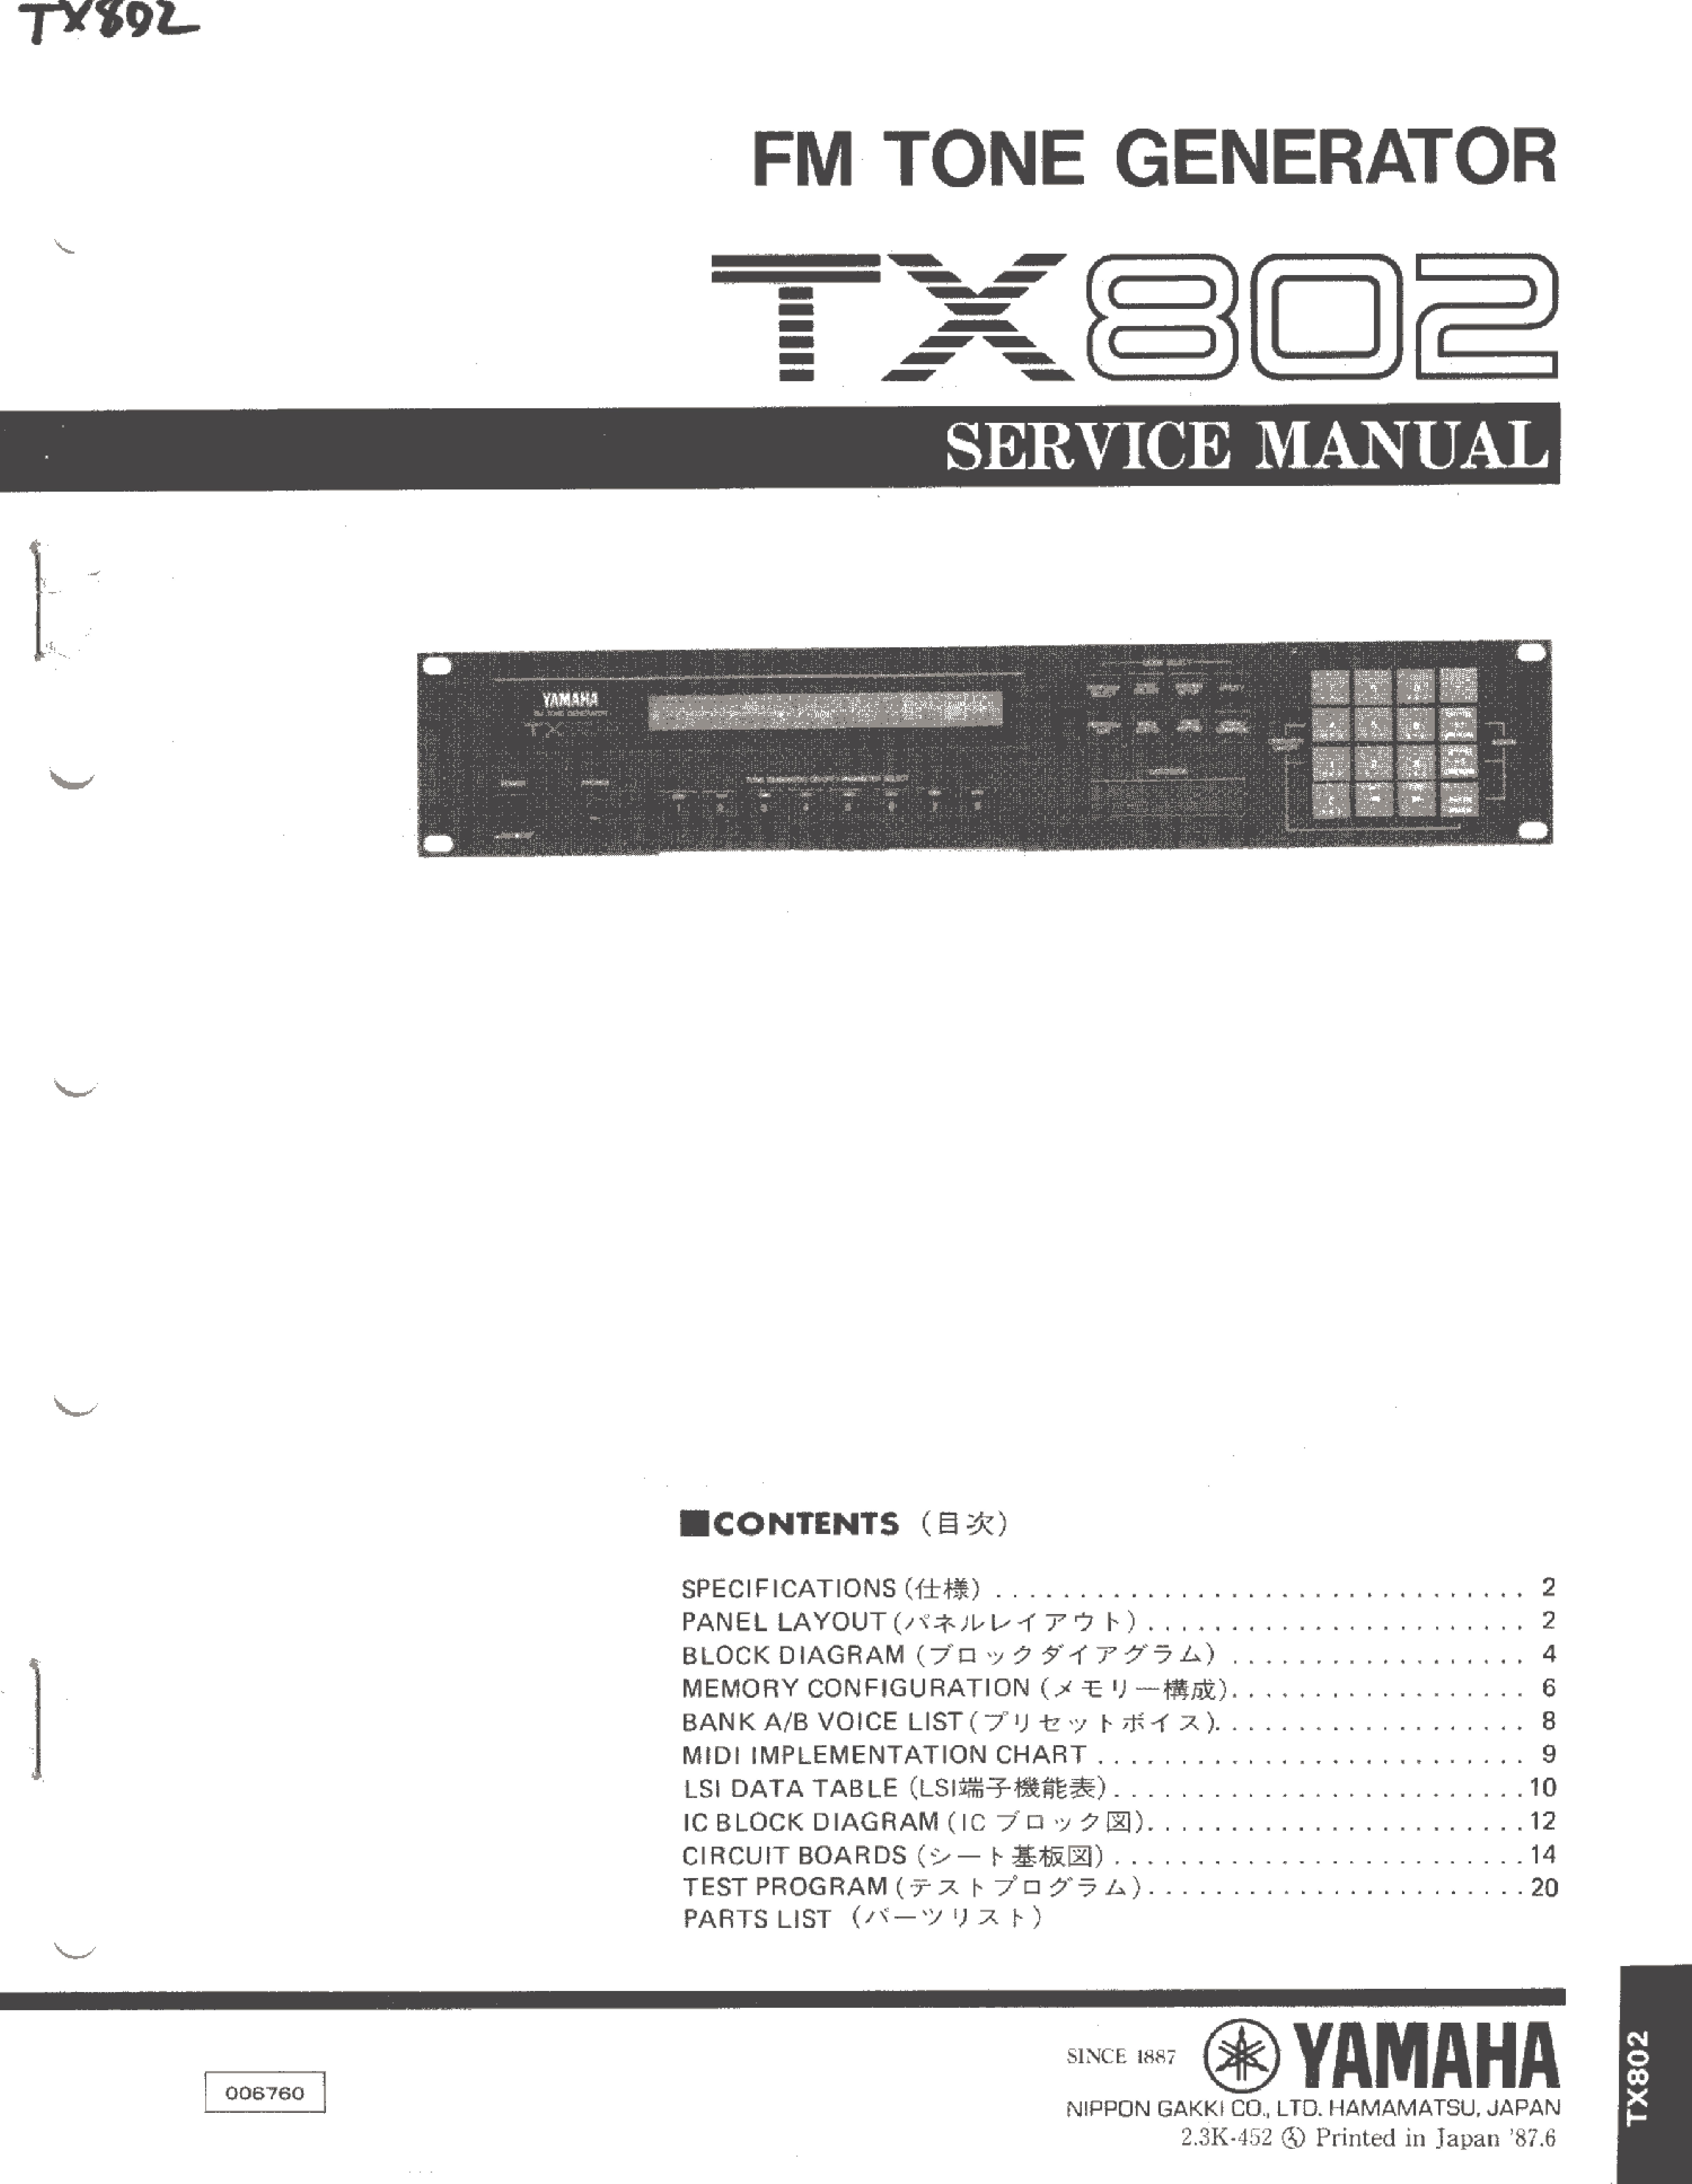 Yamaha TX802 Home Dialysis Equipment User Manual